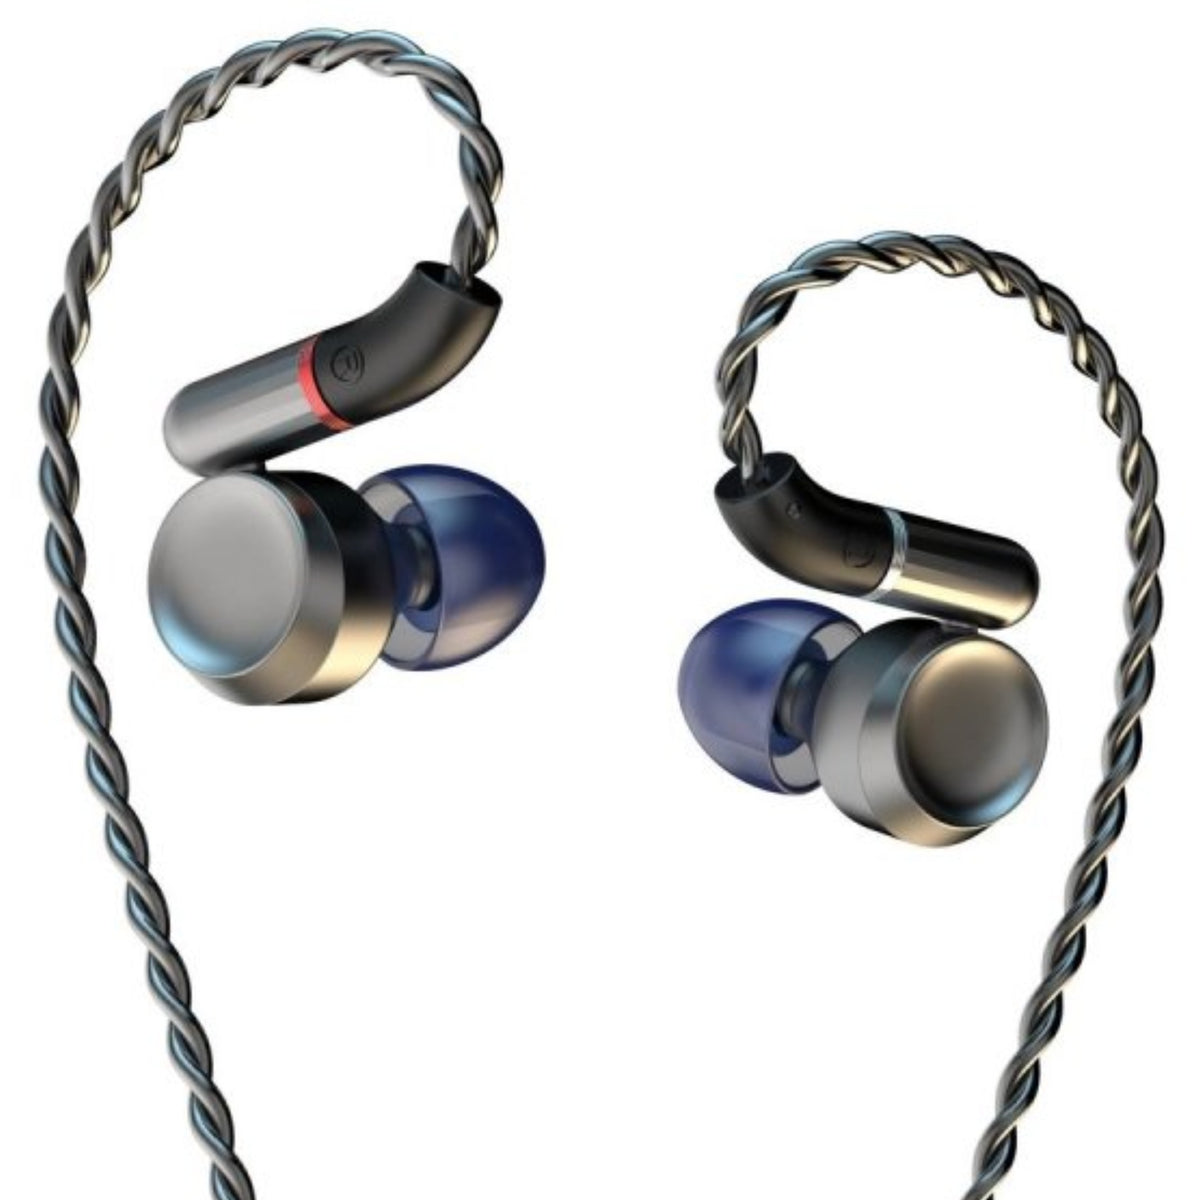 Dunu LUNA Flagship In Ear Monitors